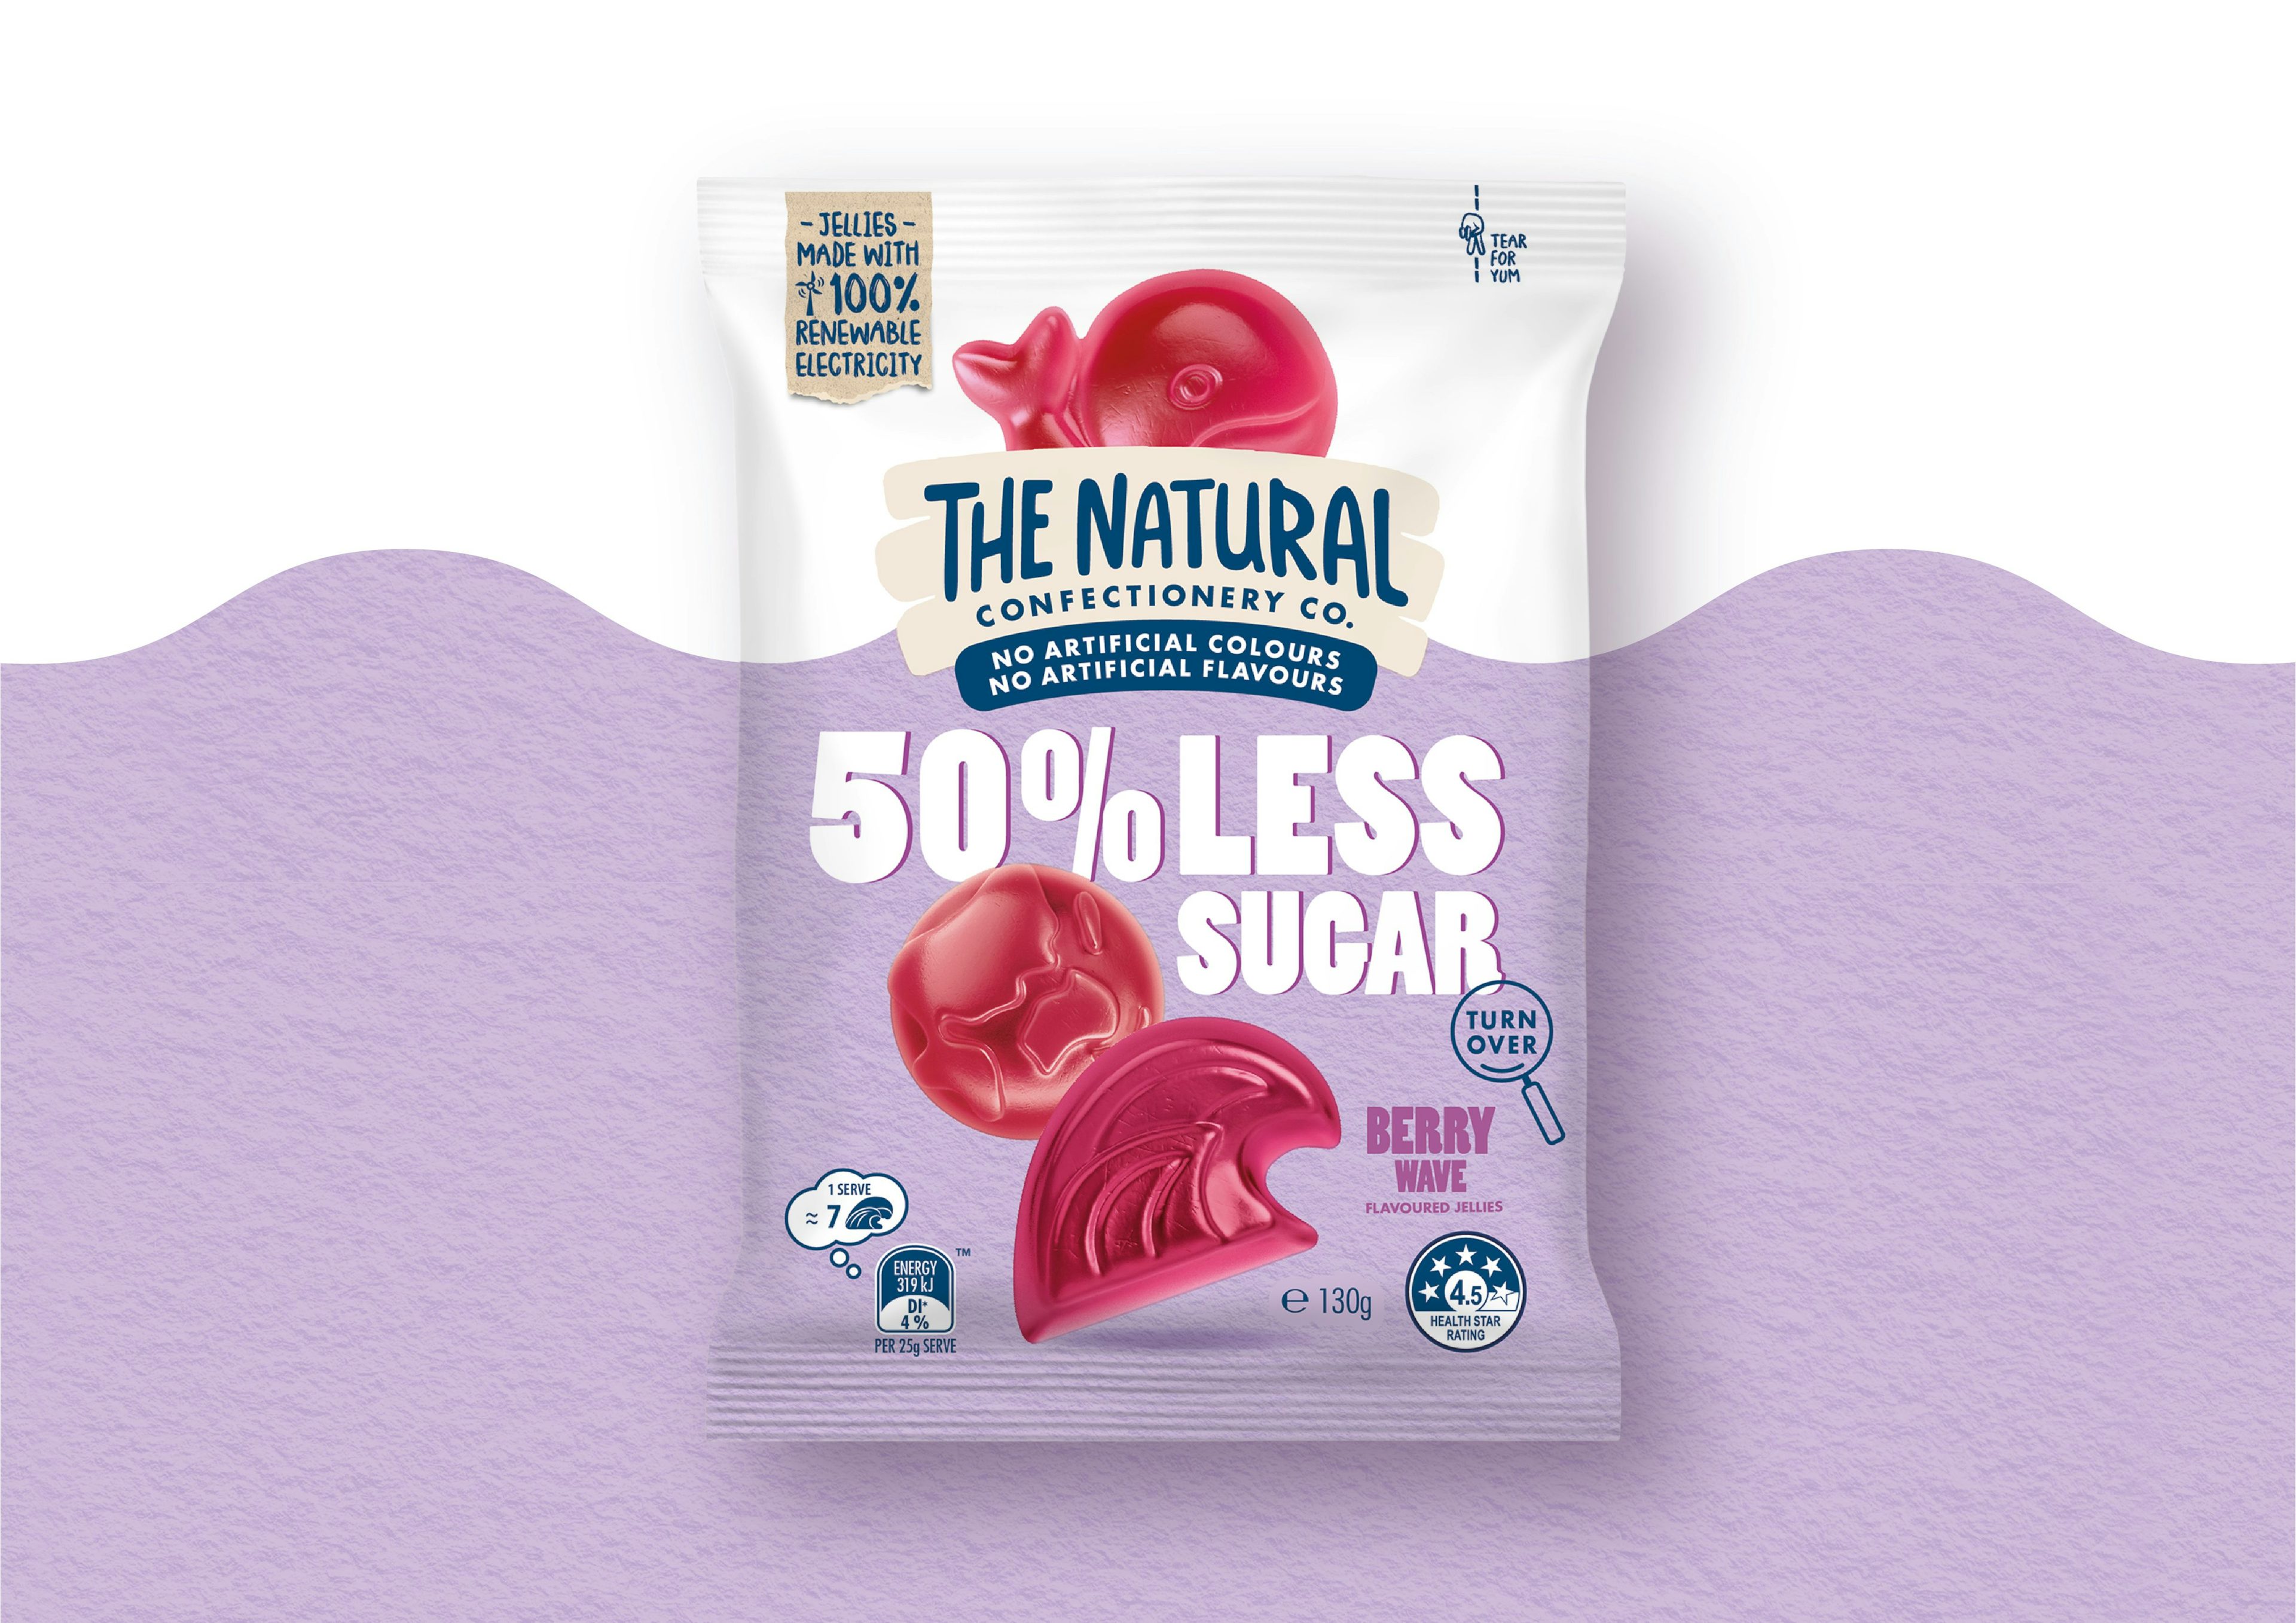 Thumbnail image for project: TNCC 50% Less Sugar